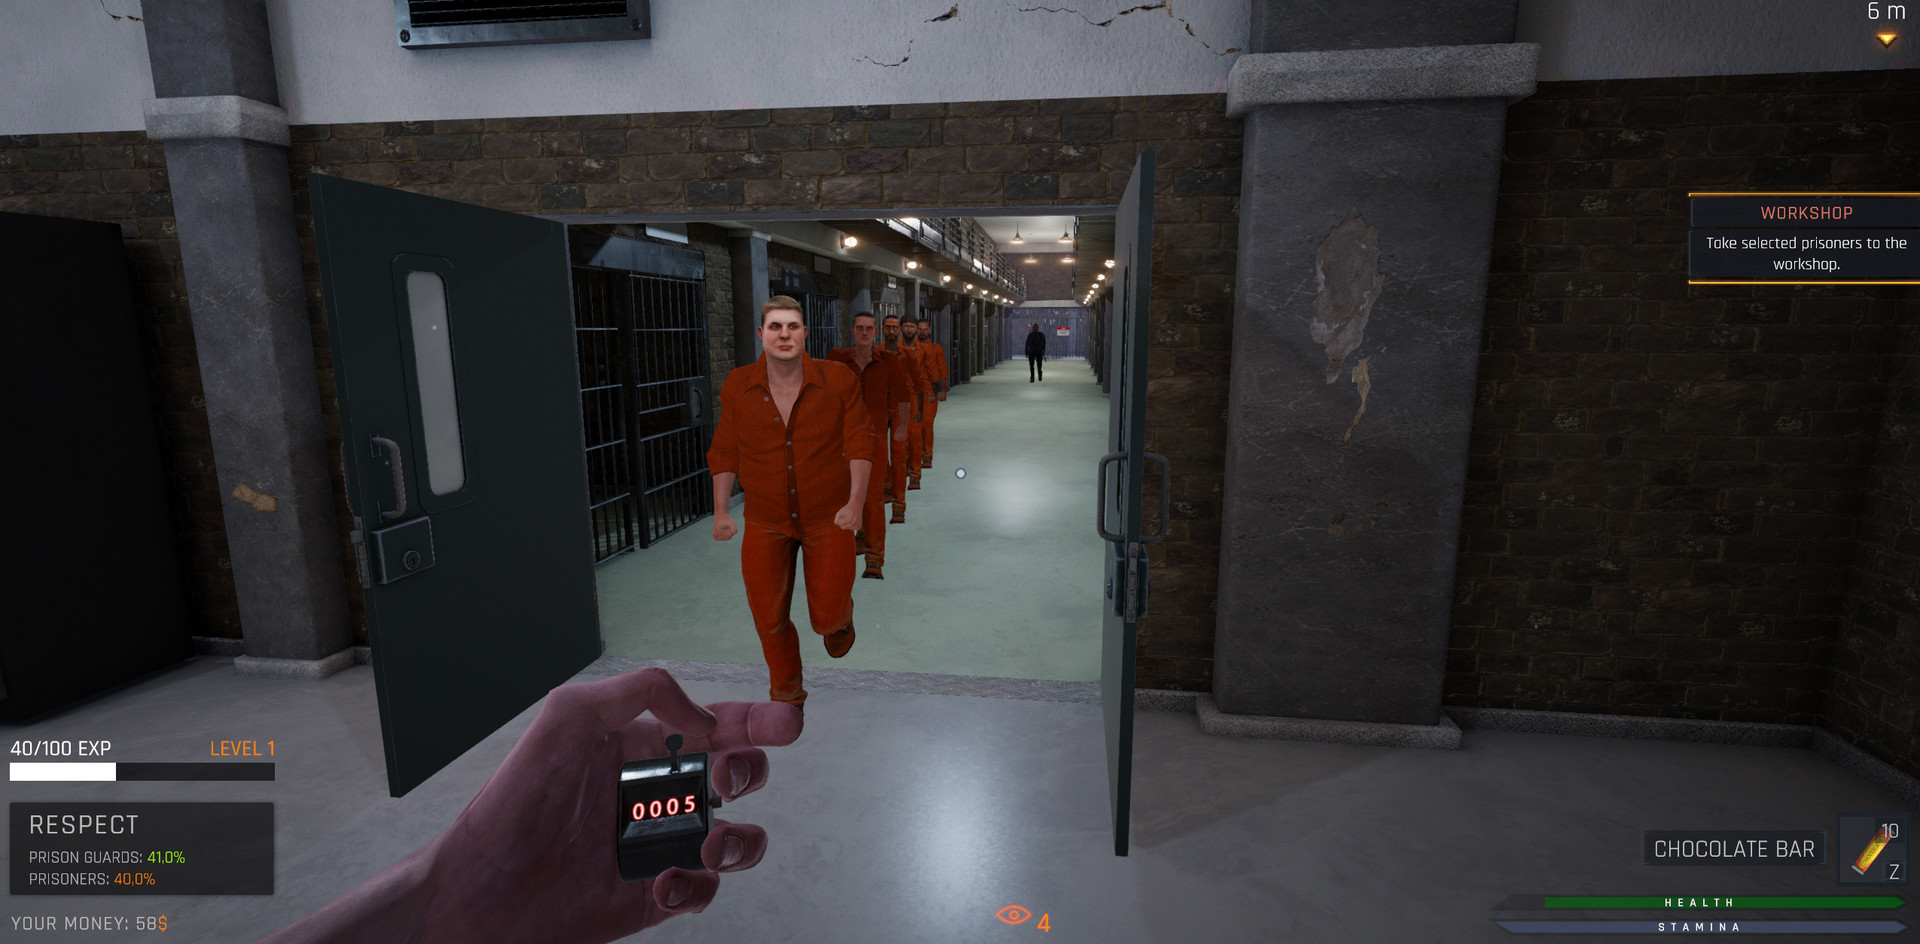 Prison Simulator Prologue